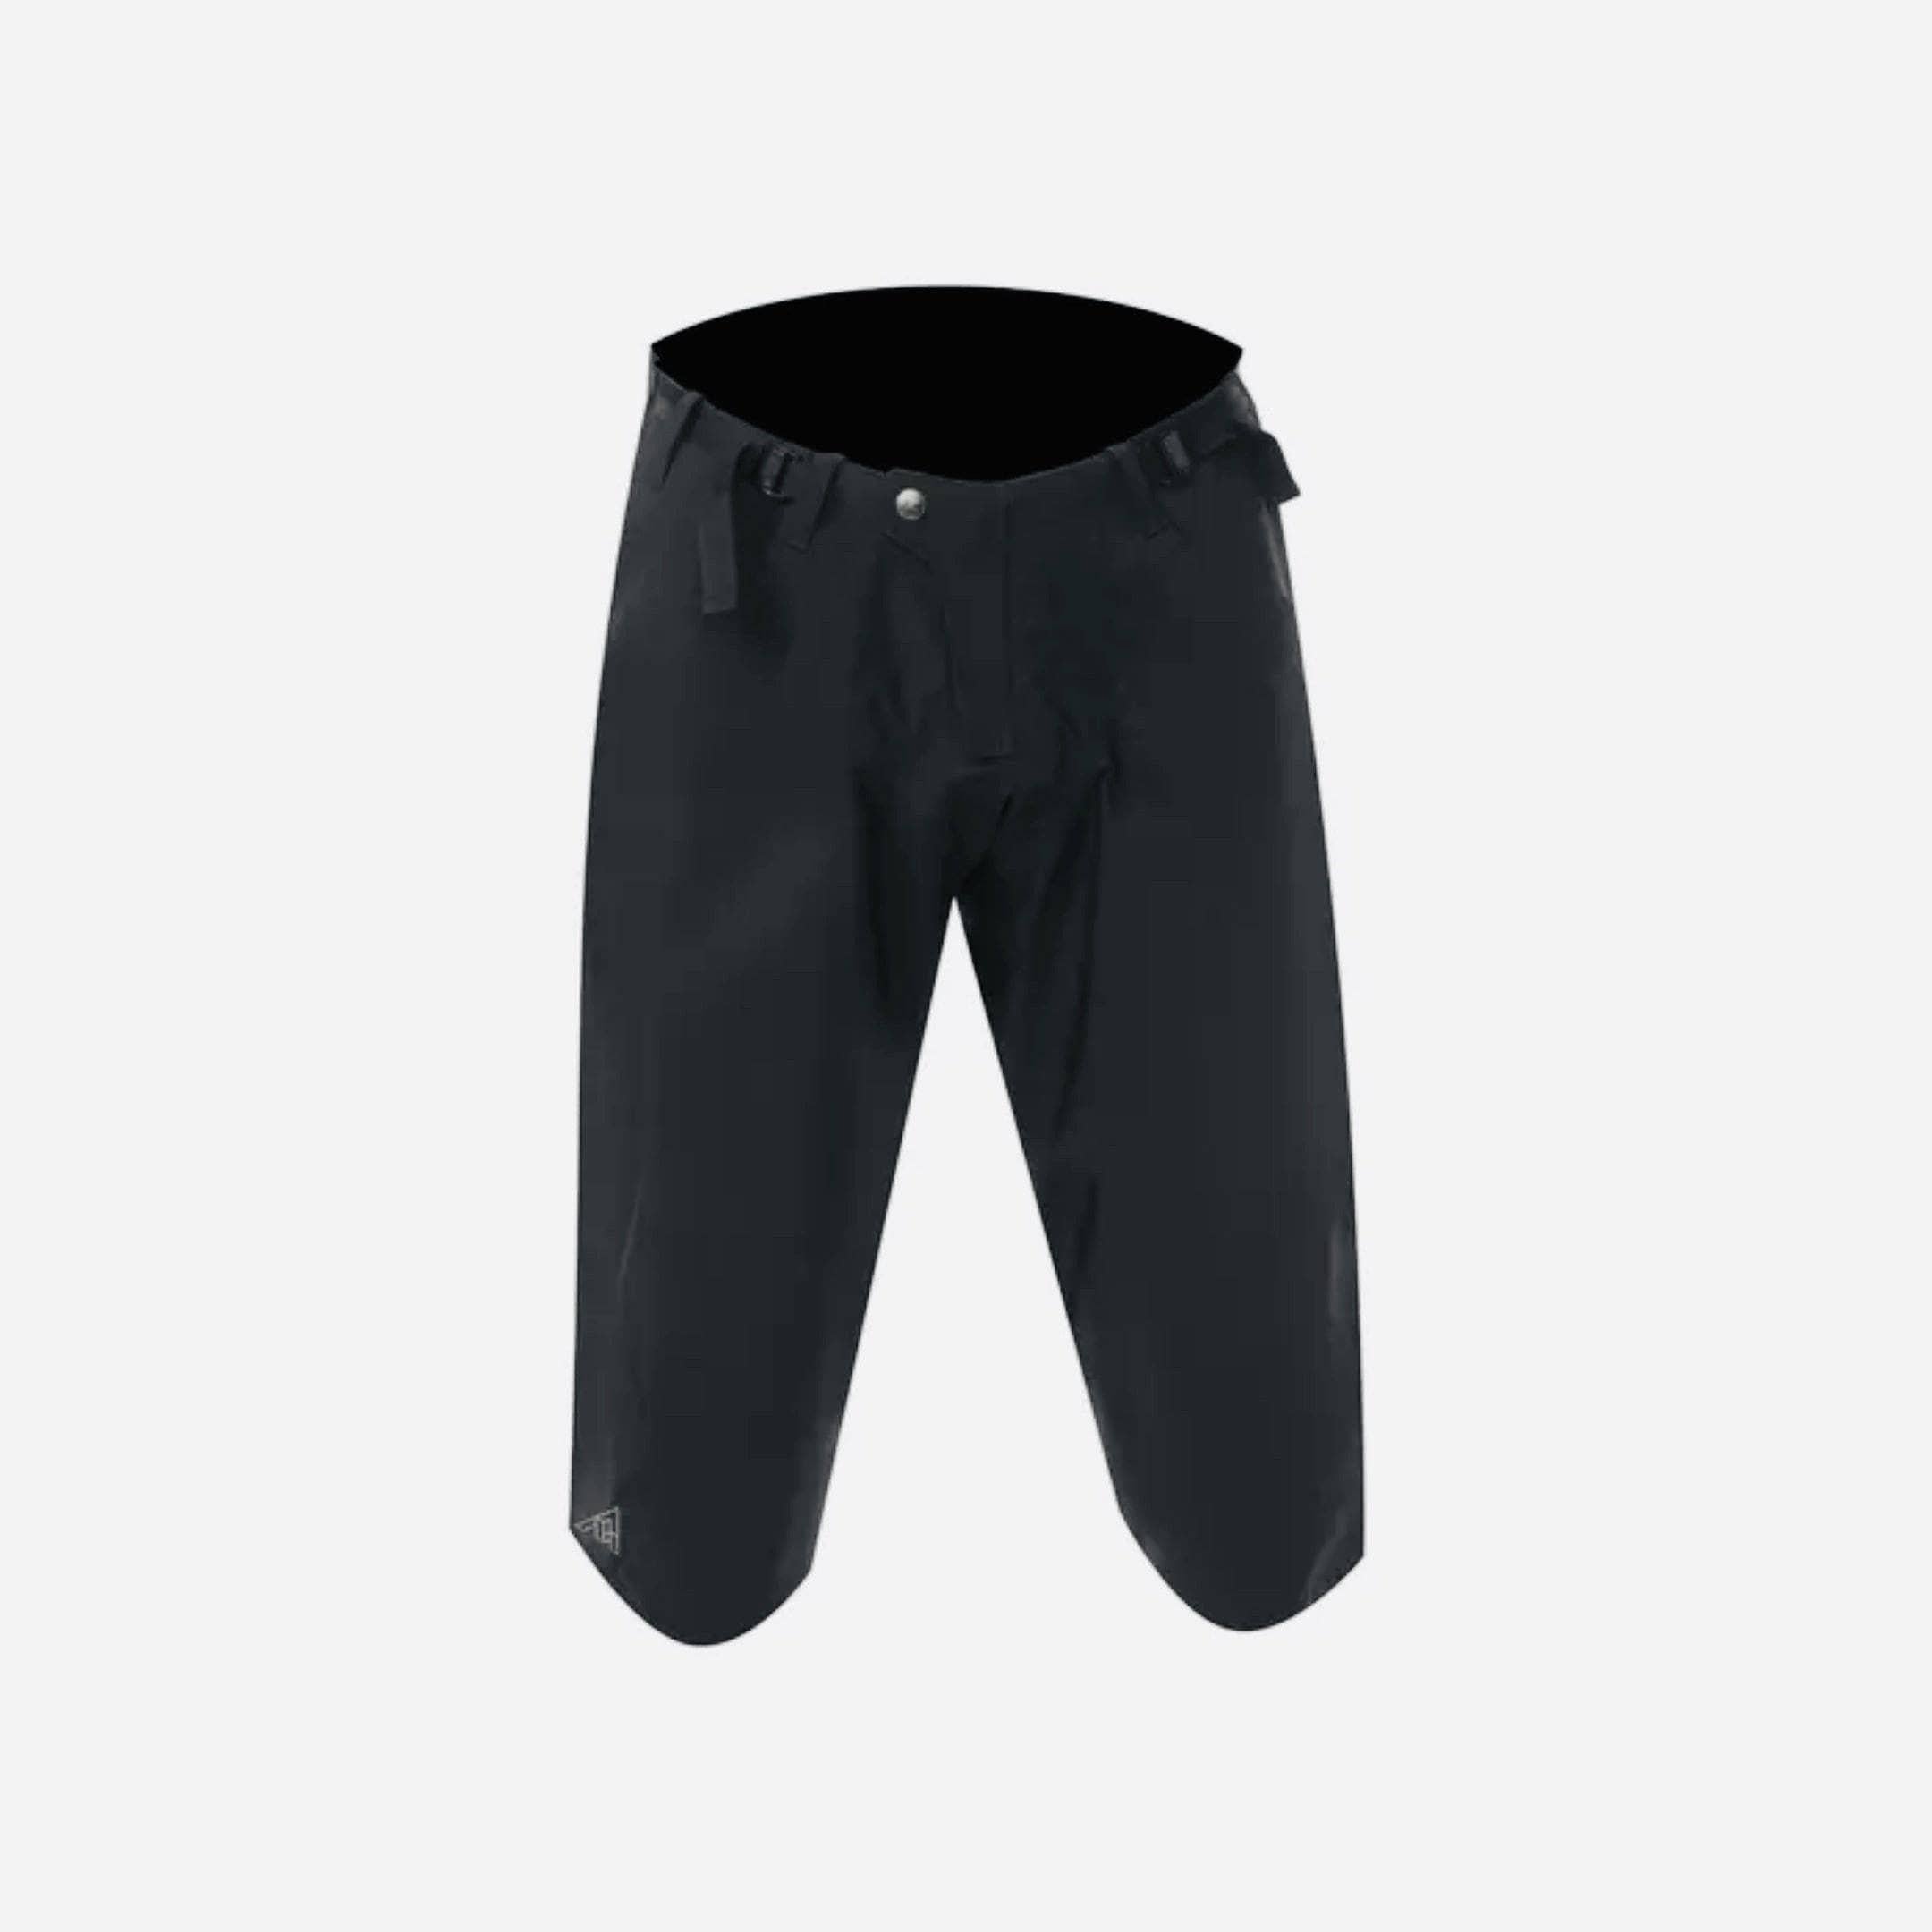 7mesh Men's Revo Short Black / XS Apparel - Clothing - Men's Shorts - Mountain